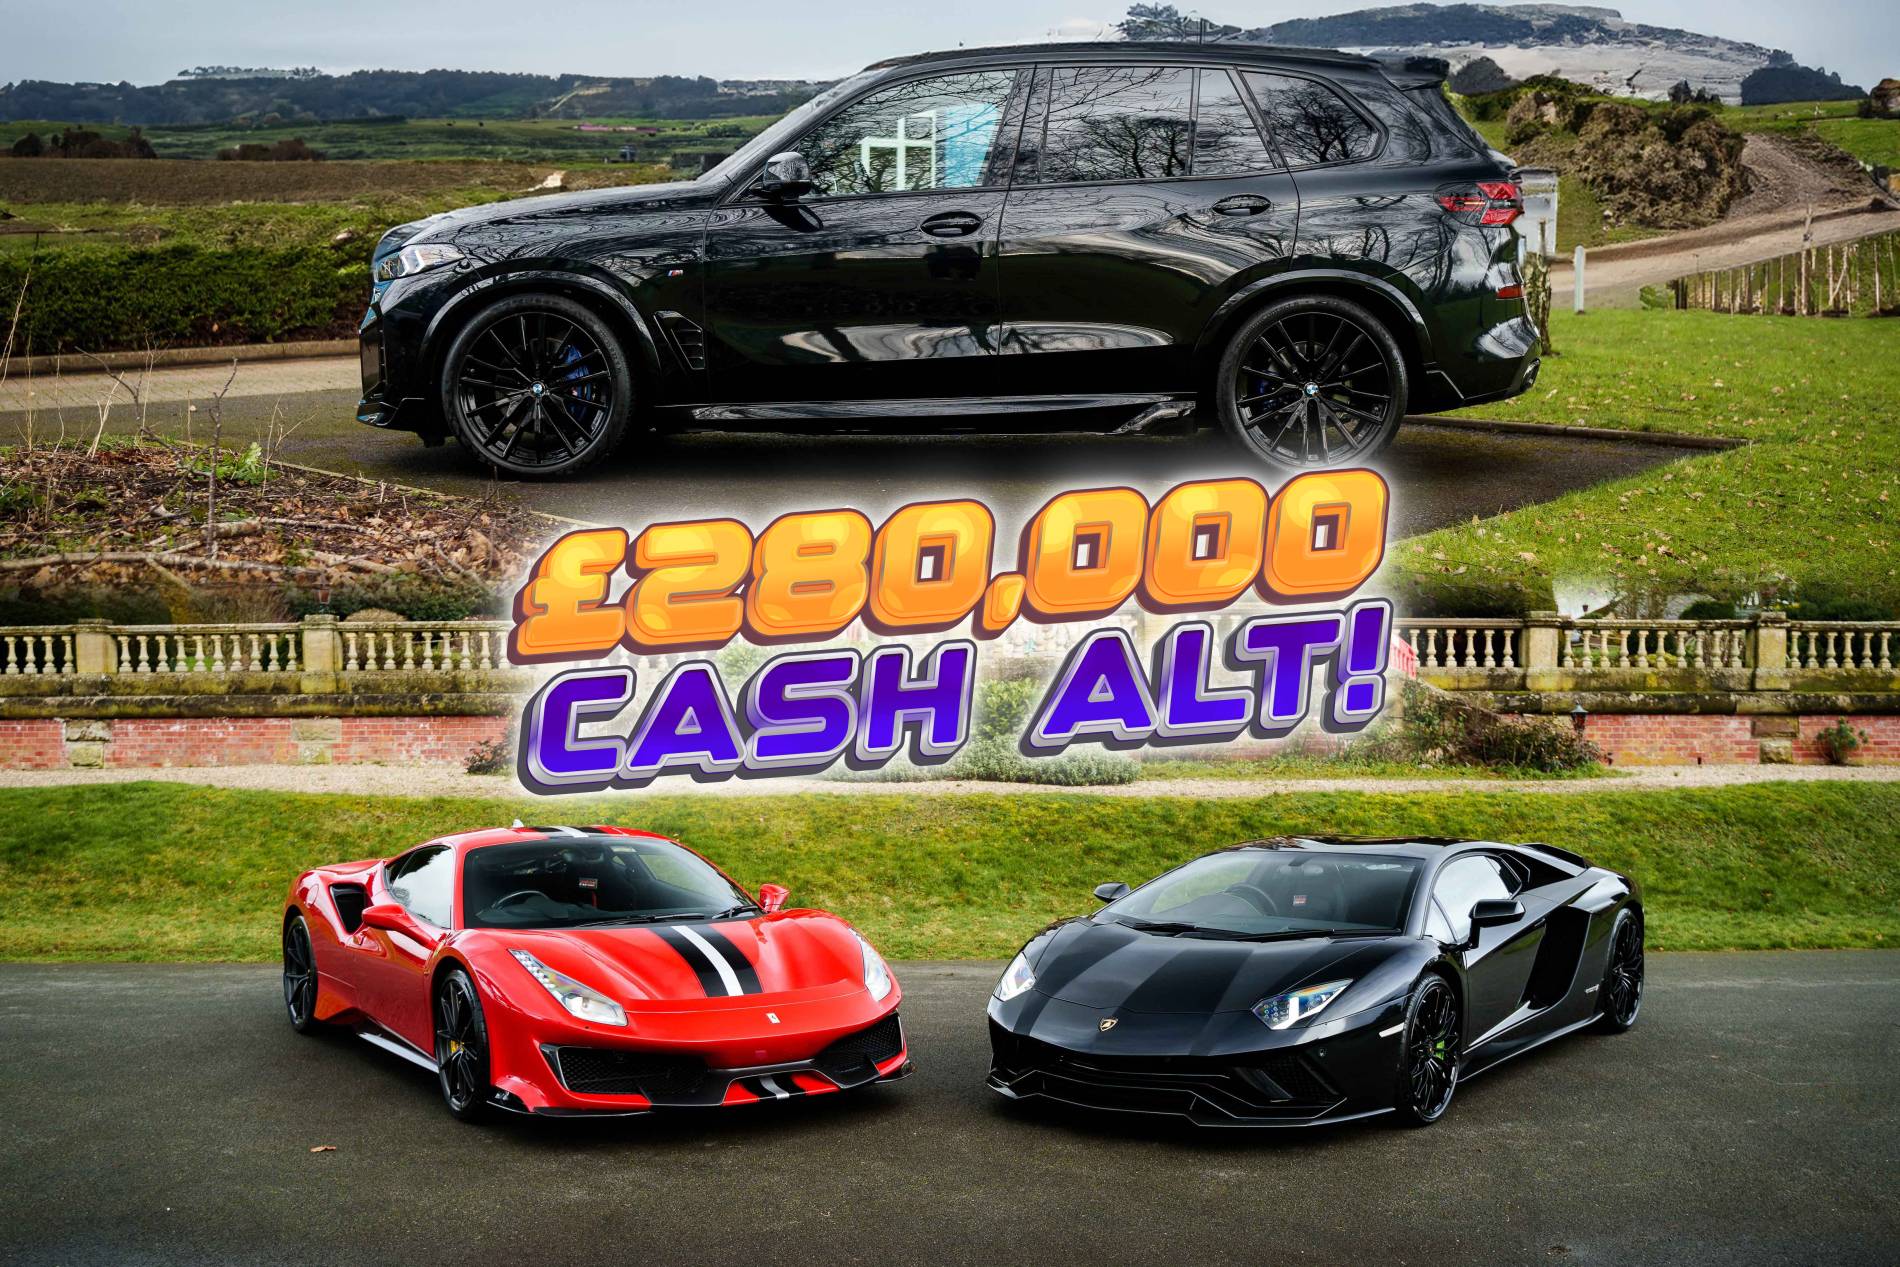 Win this 2023 BMW X5 & Ferrari Pista Or Lamborghini Aventador S or £280,000 Tax Free Cash